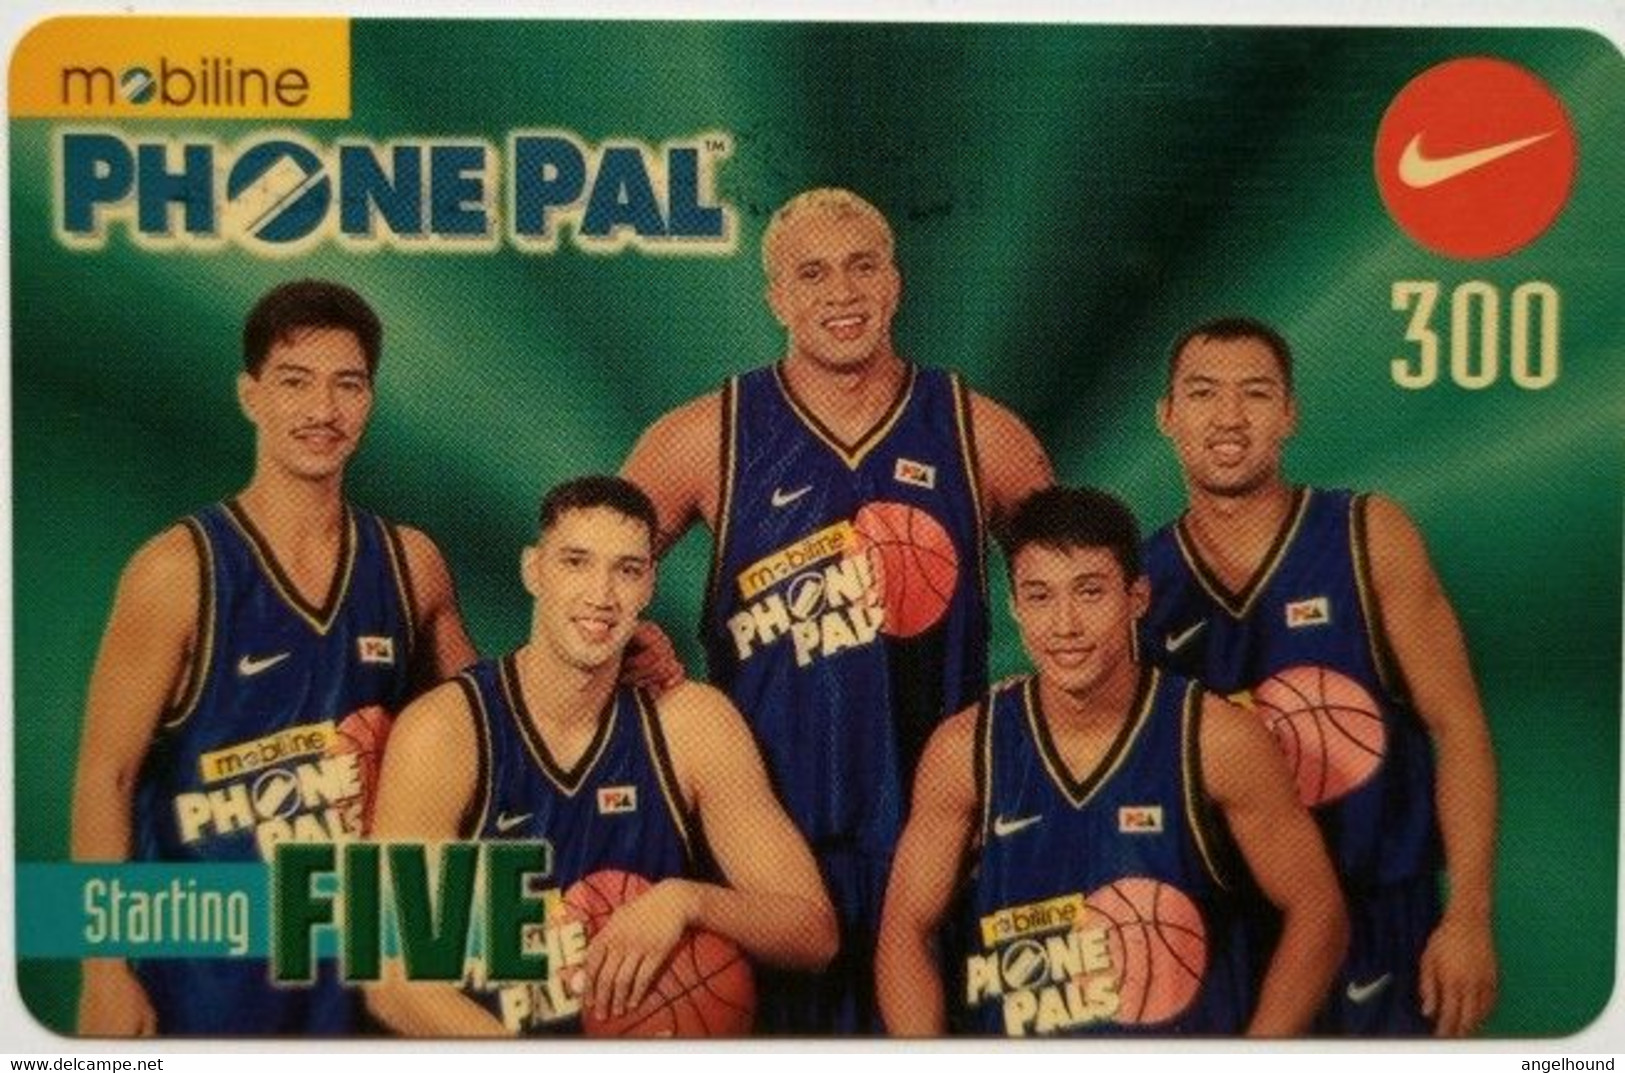 Philippines Mobiline Phonepal 300 Peso " Basketball " - Philippinen